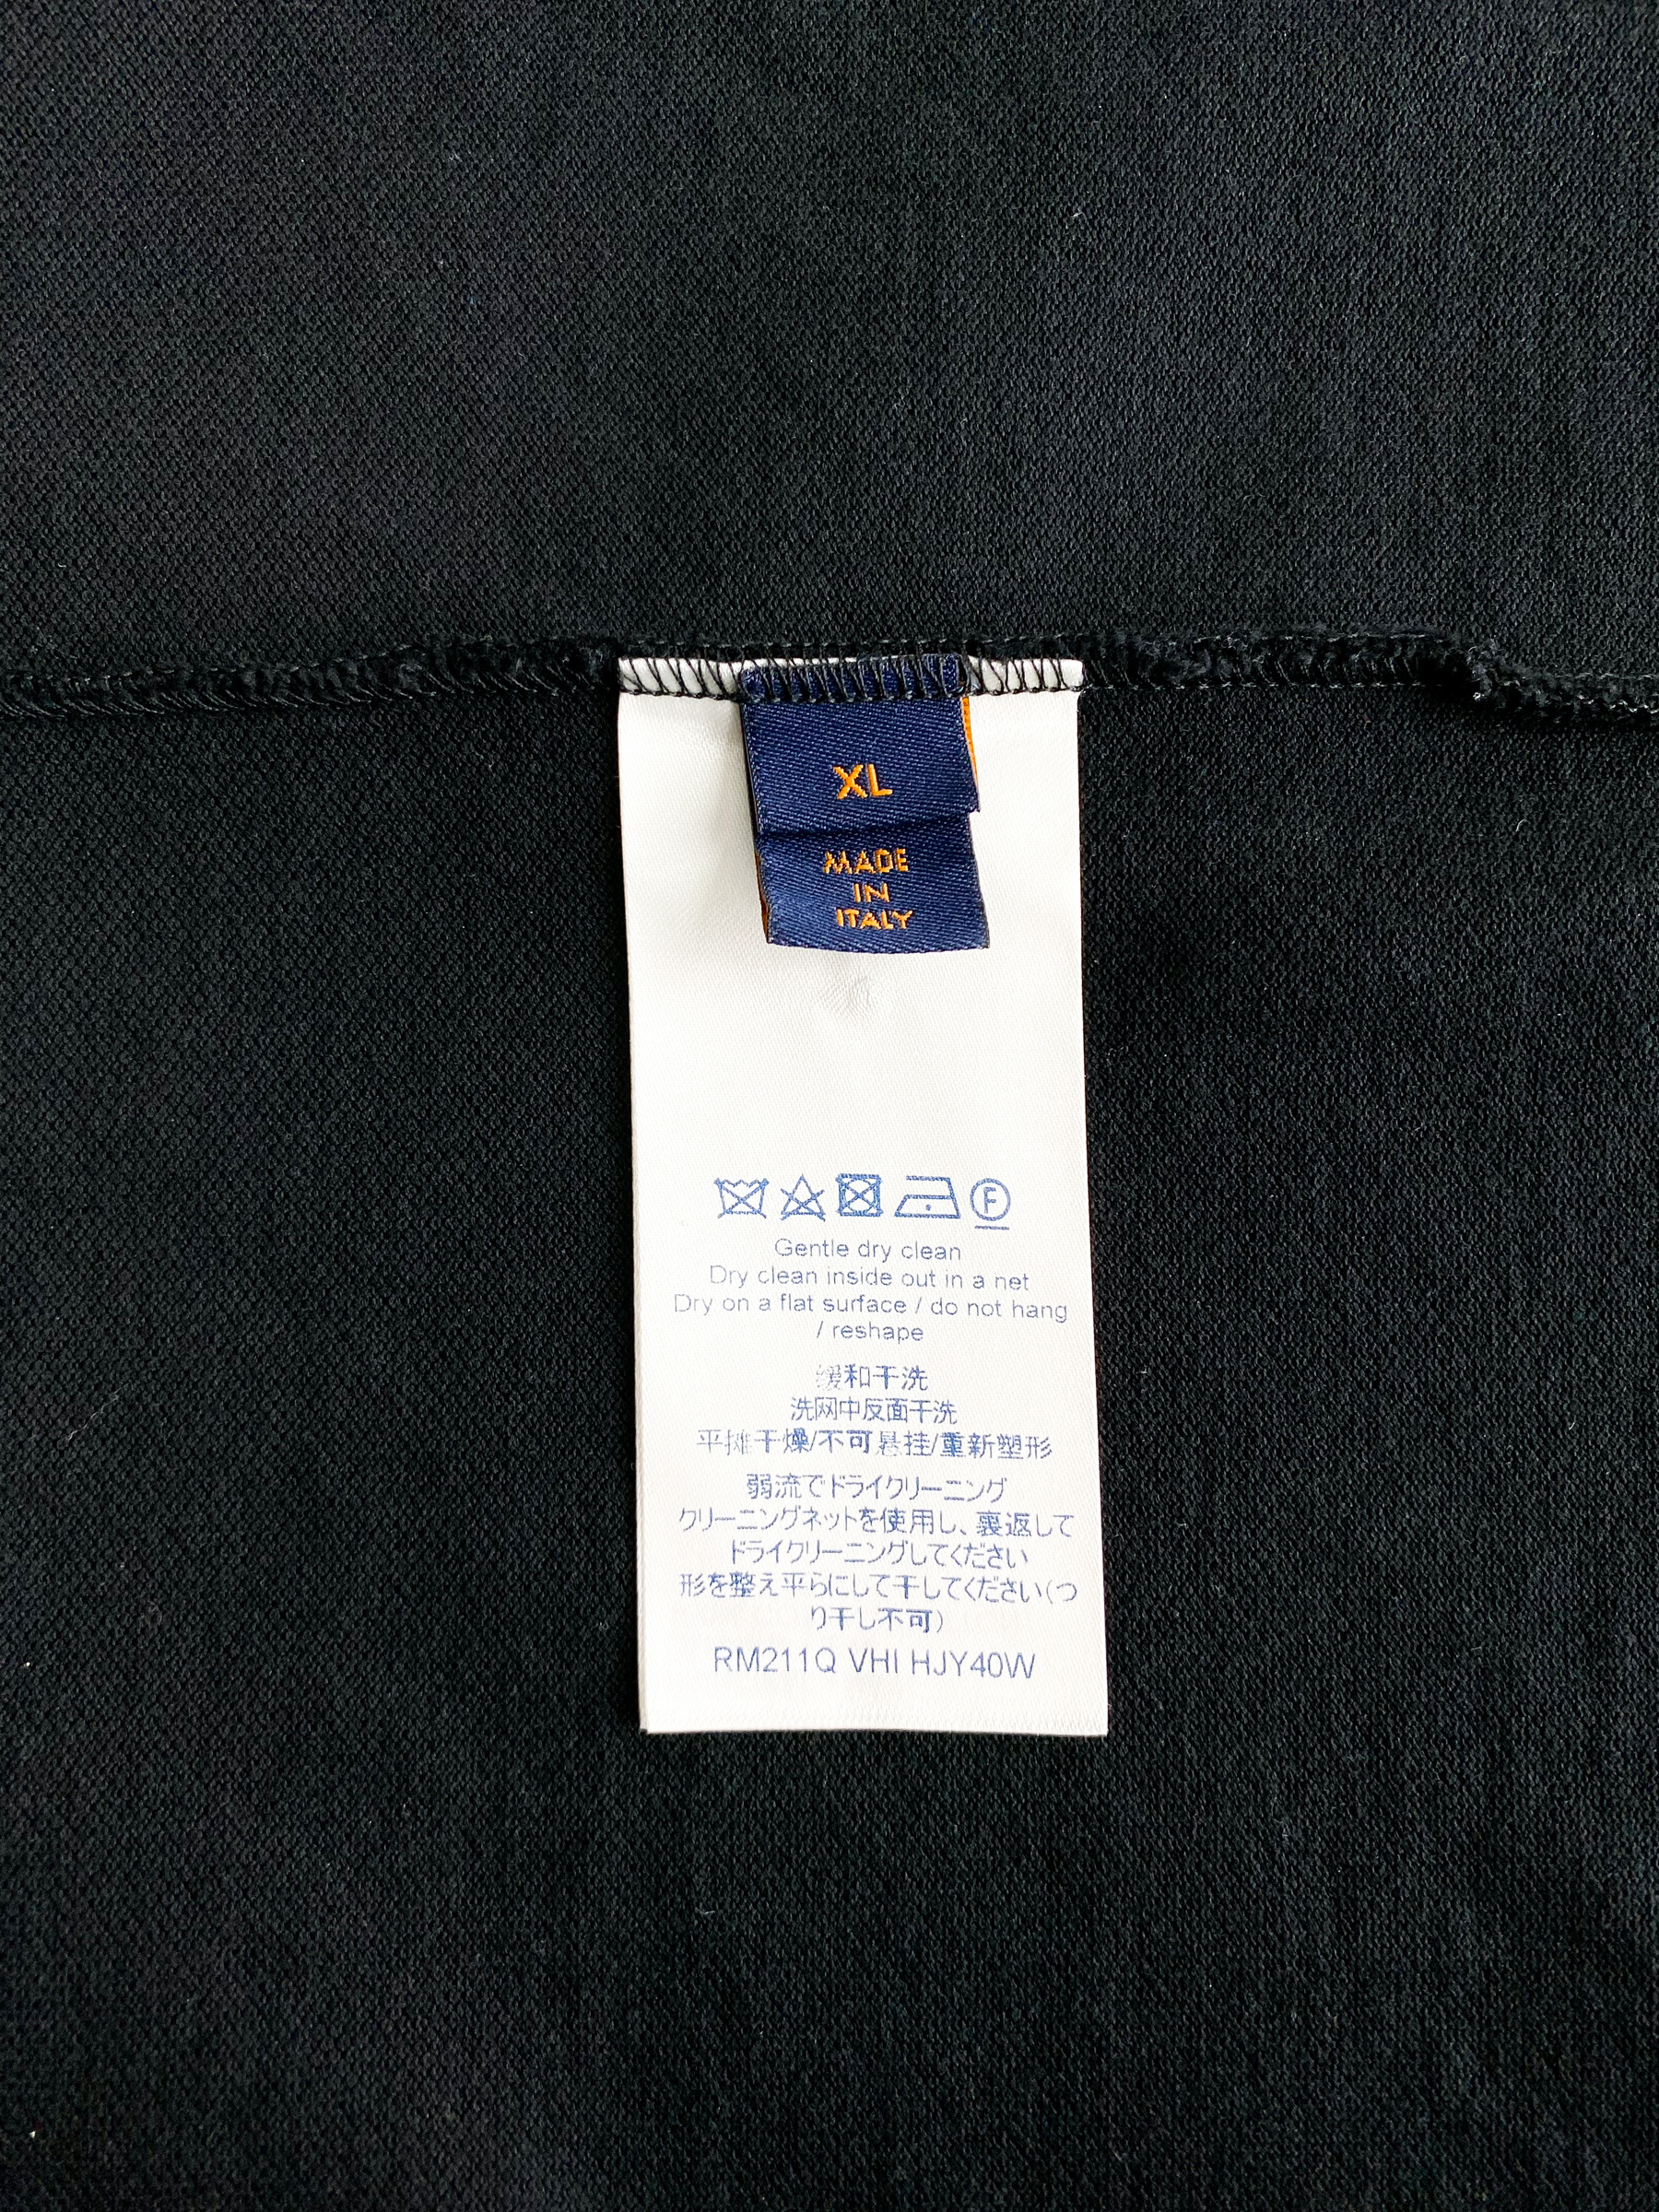 Louis Vuitton Half Damier Pocket T-Shirt BLACK. Size M0